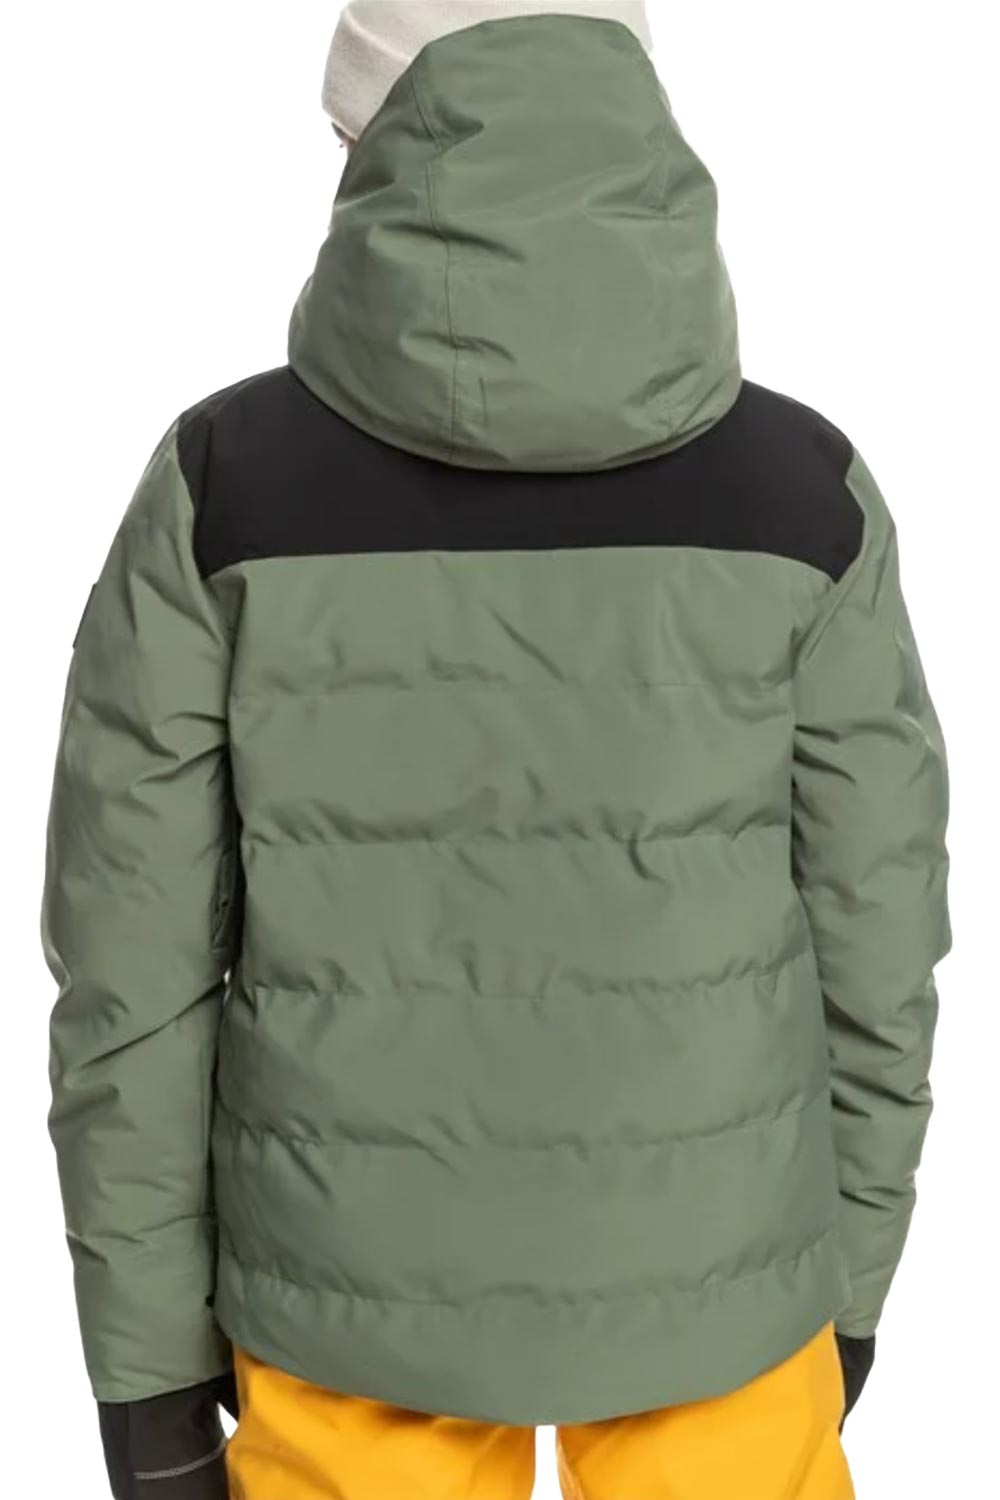 boys' puffy snowboard jacket, green and black